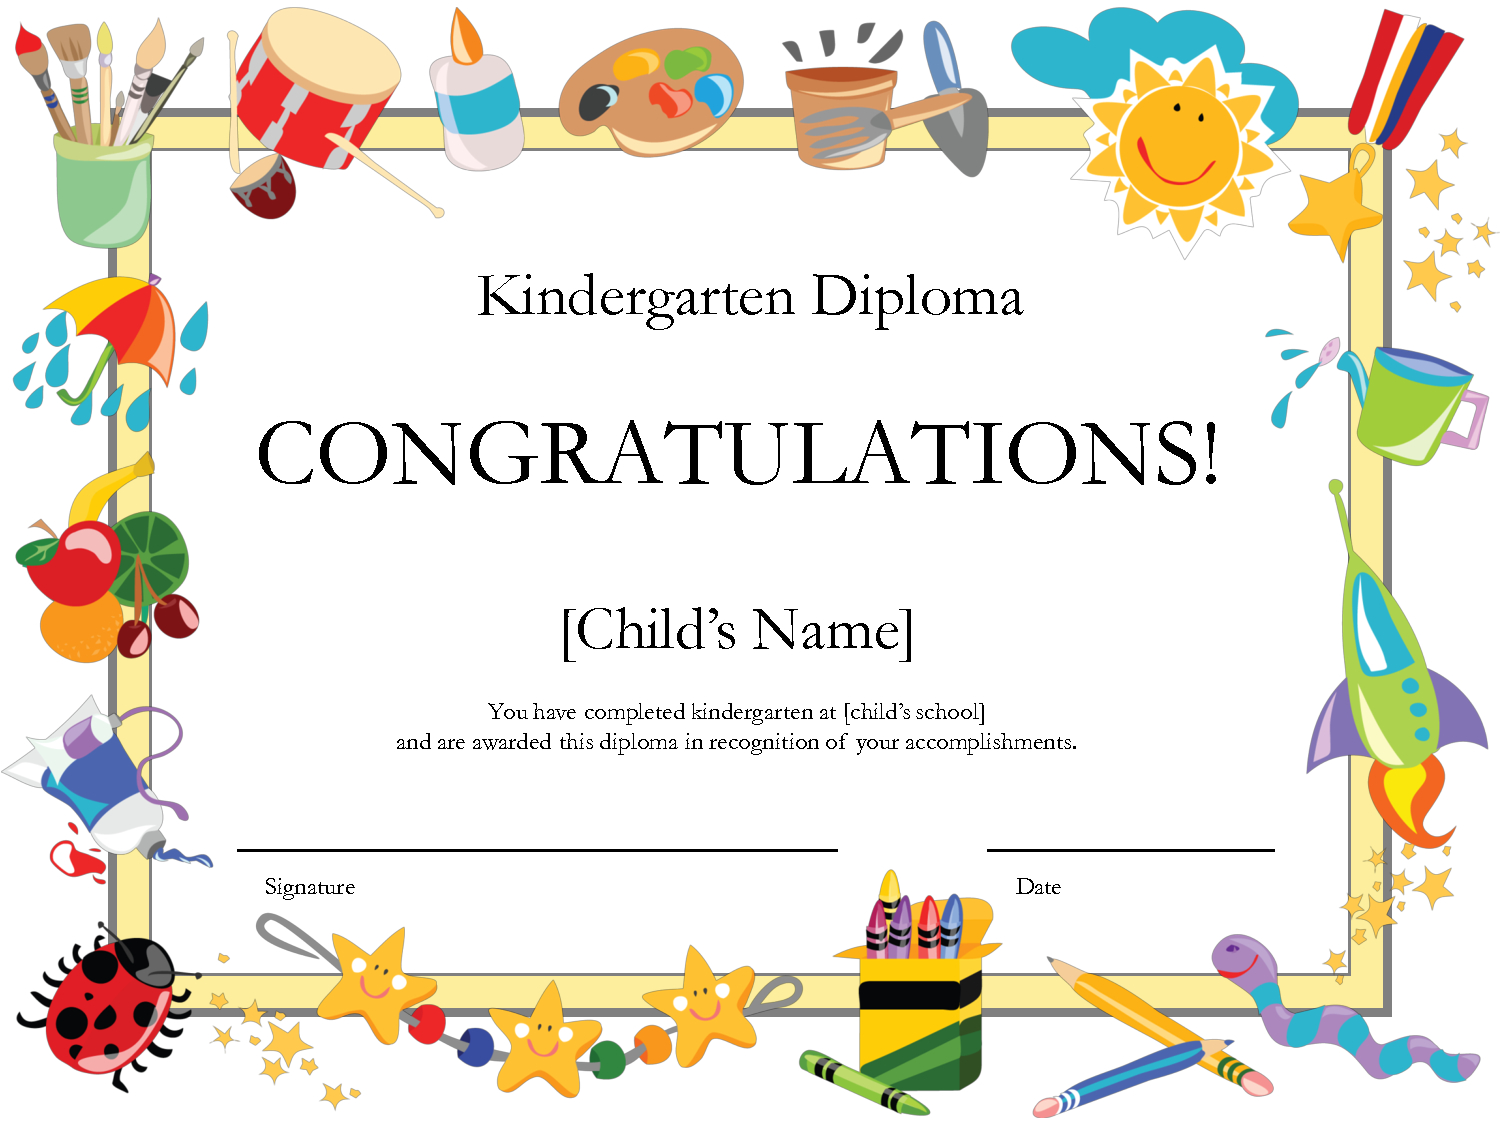 Free Printable Kindergarten Diplomaprintshowergames Inside Children's Certificate Template